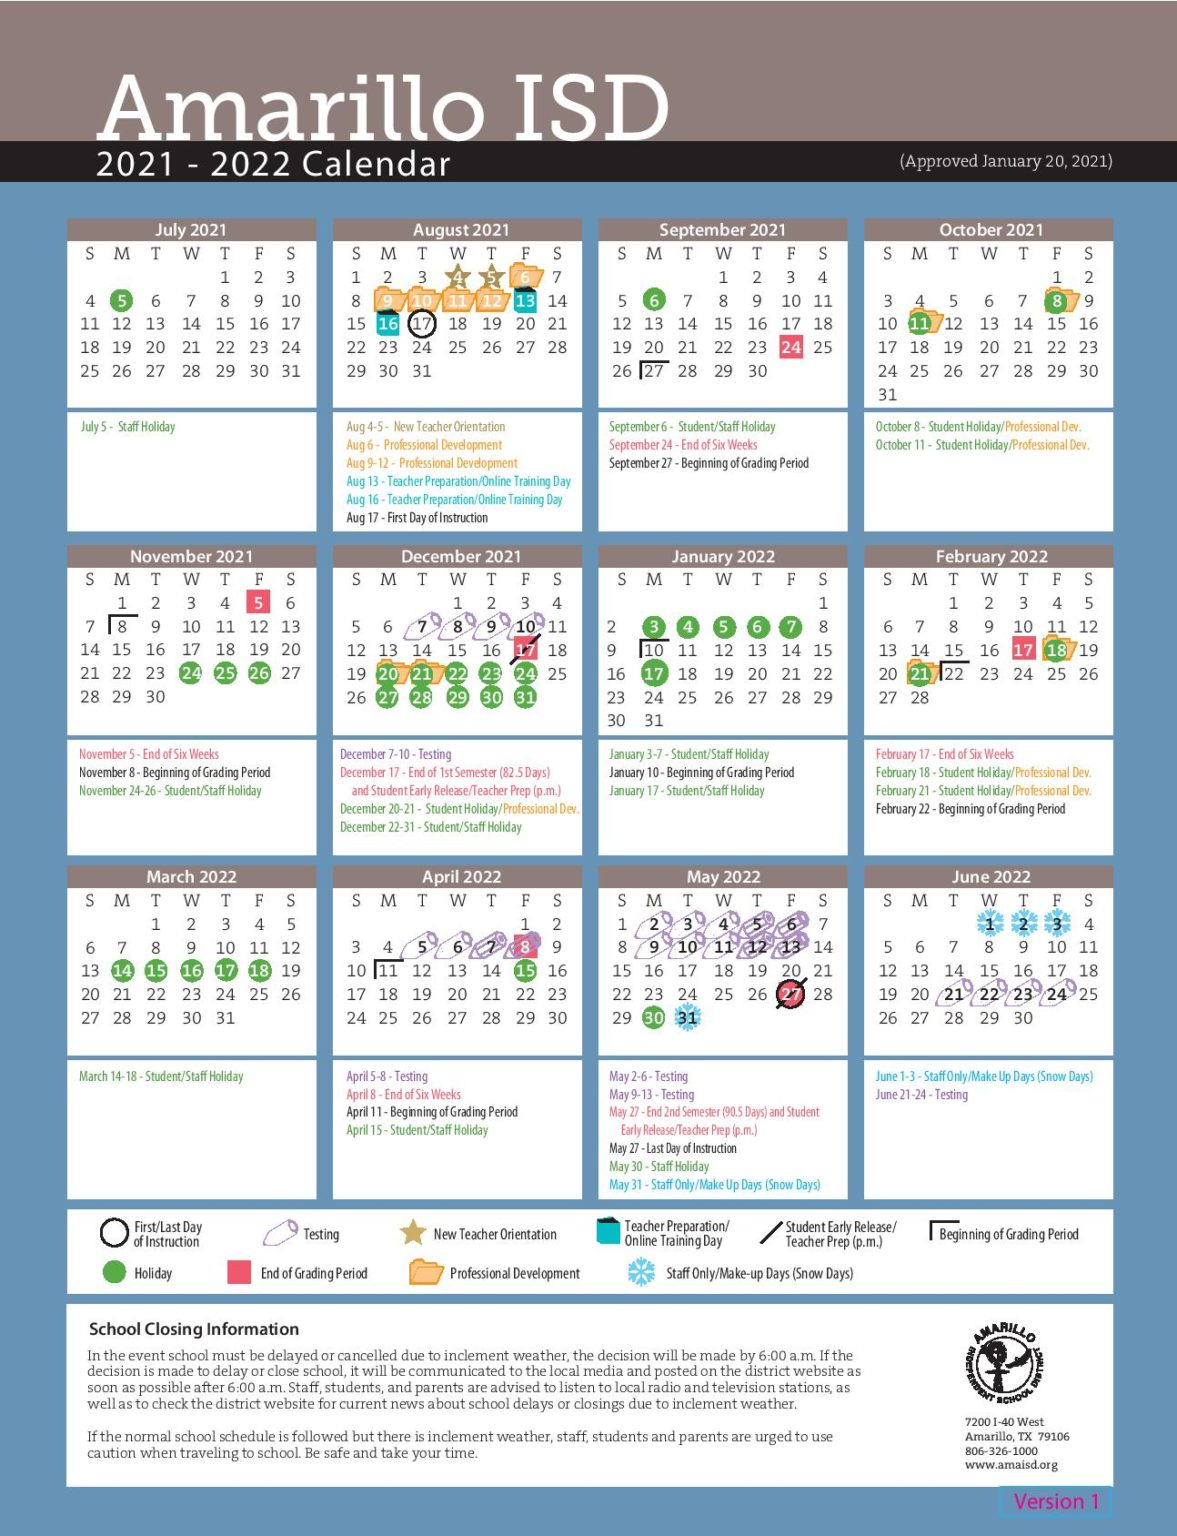 Amarillo Independent School District Calendar 2021-2022